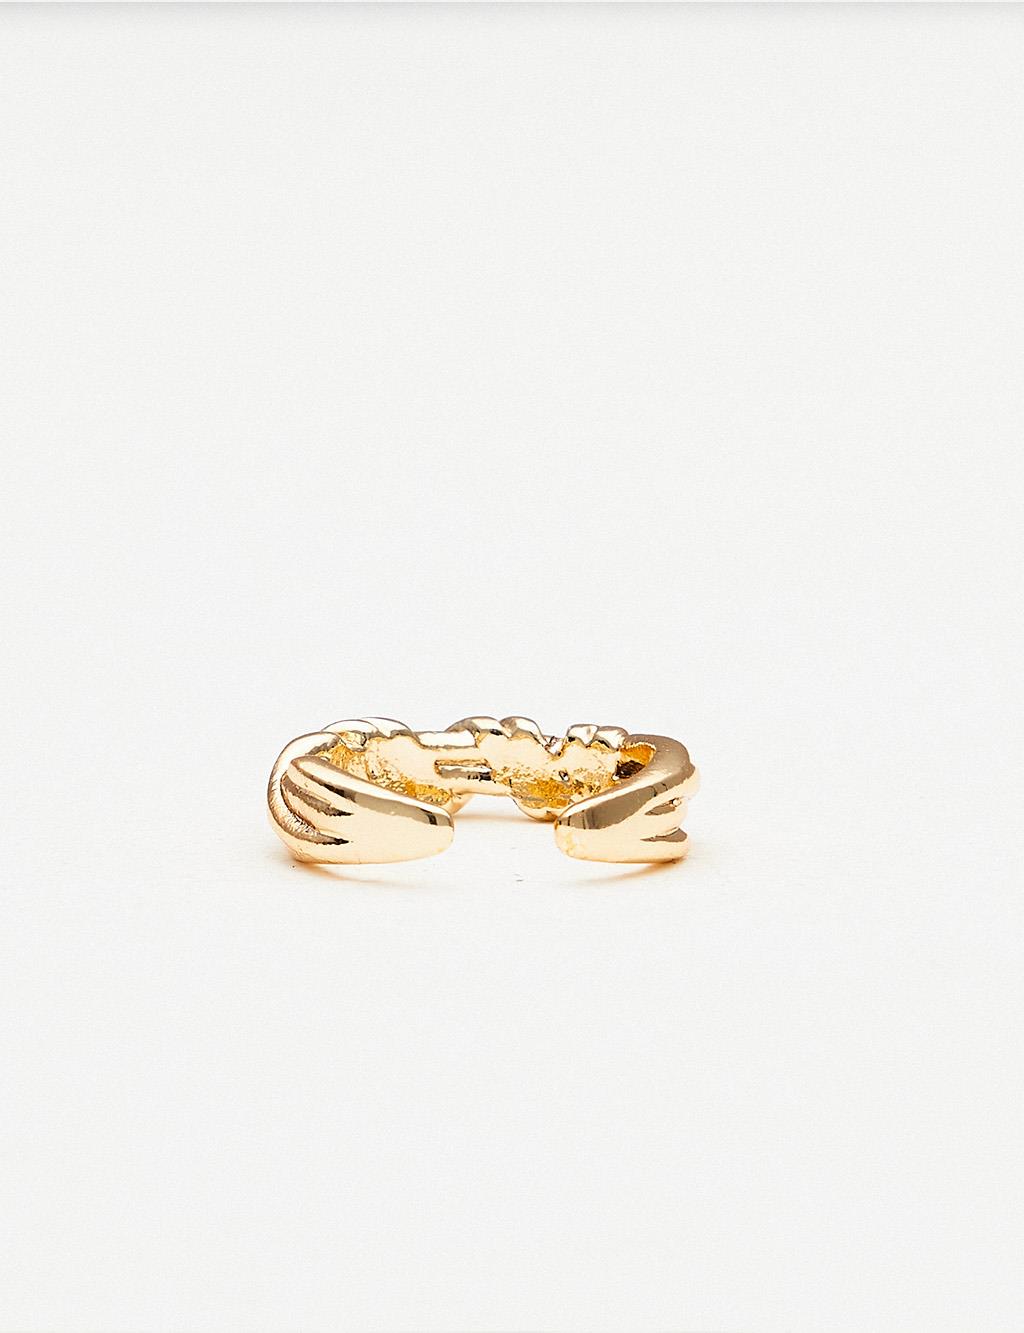 Adjustable Knit Ring Gold Color